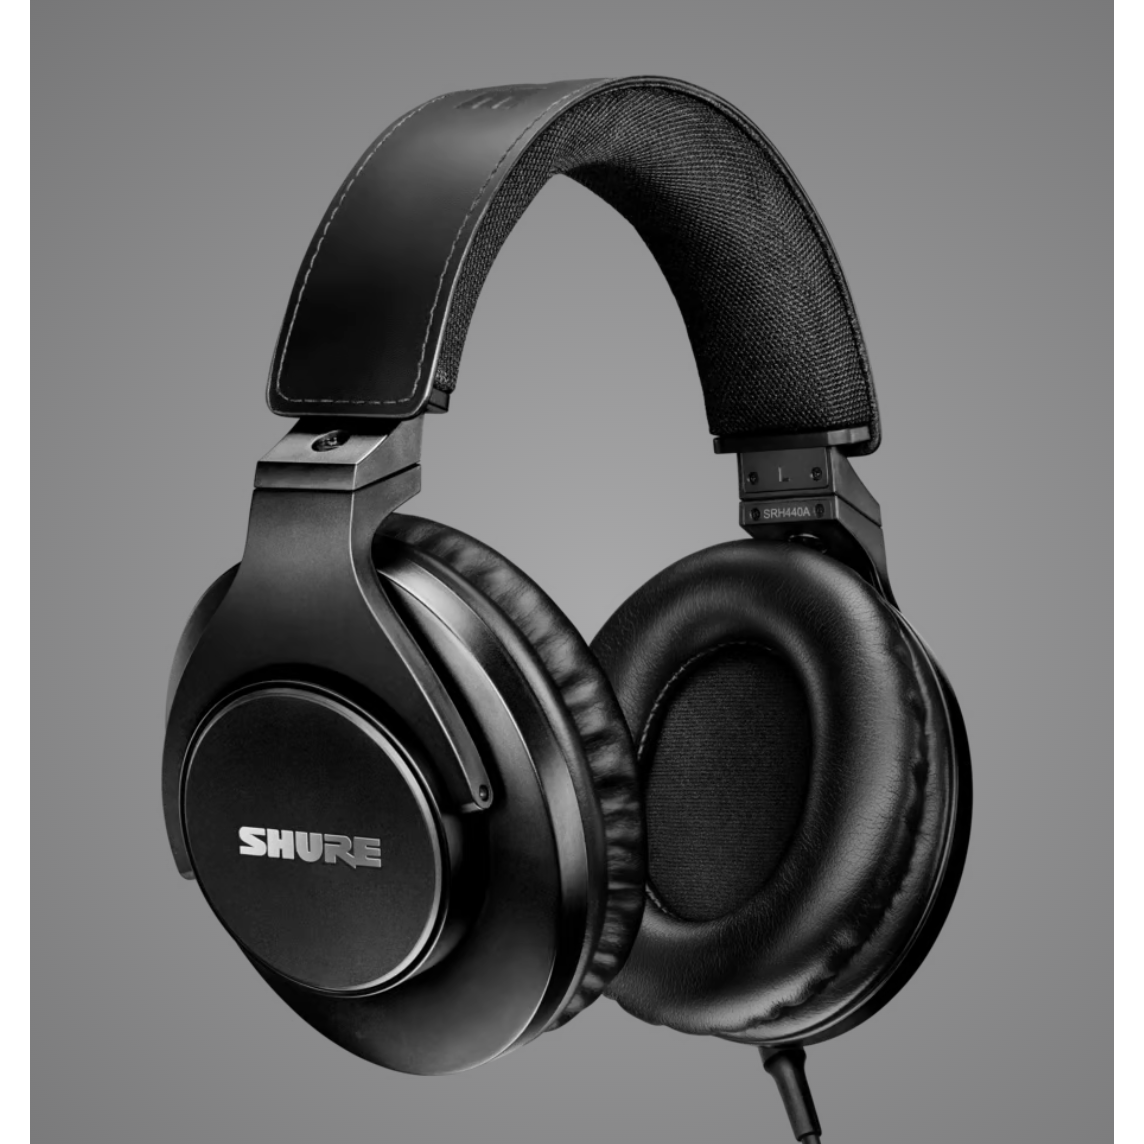 Shure SRH440 Professional Studio Headphones (Black) by Shure - 3